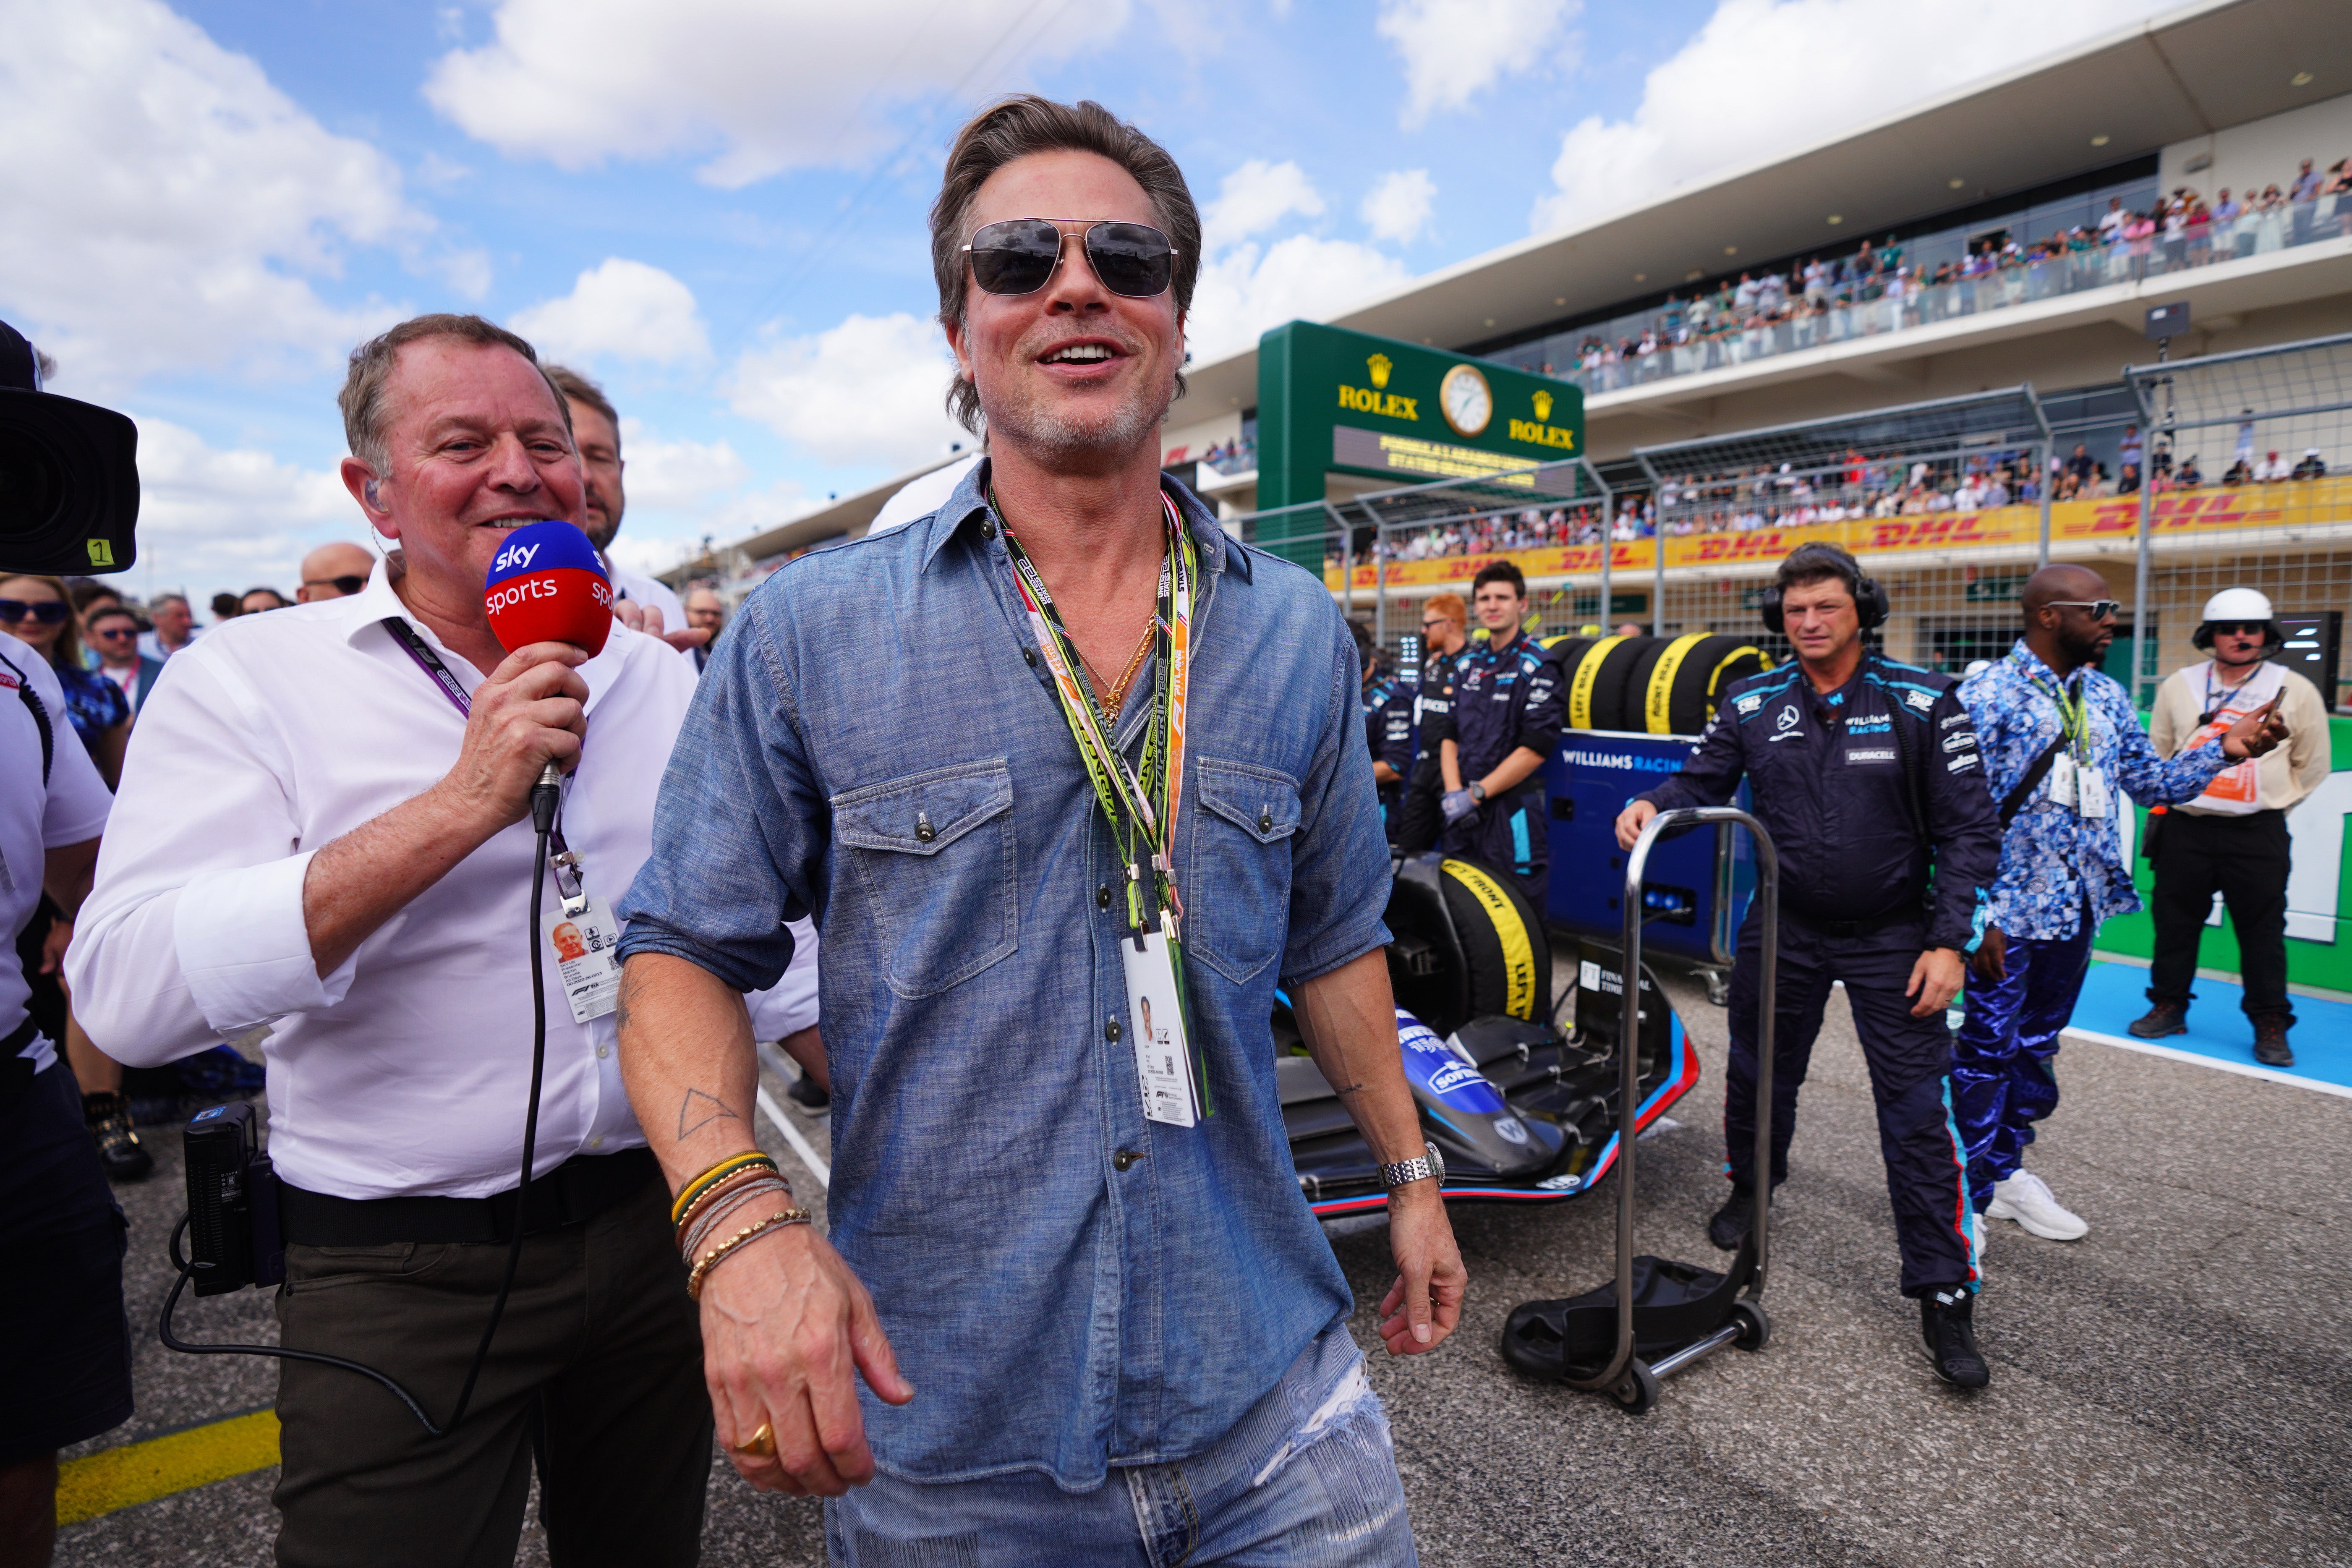 Brad Pitt attended the US Grand Prix in Austin, Texas last year